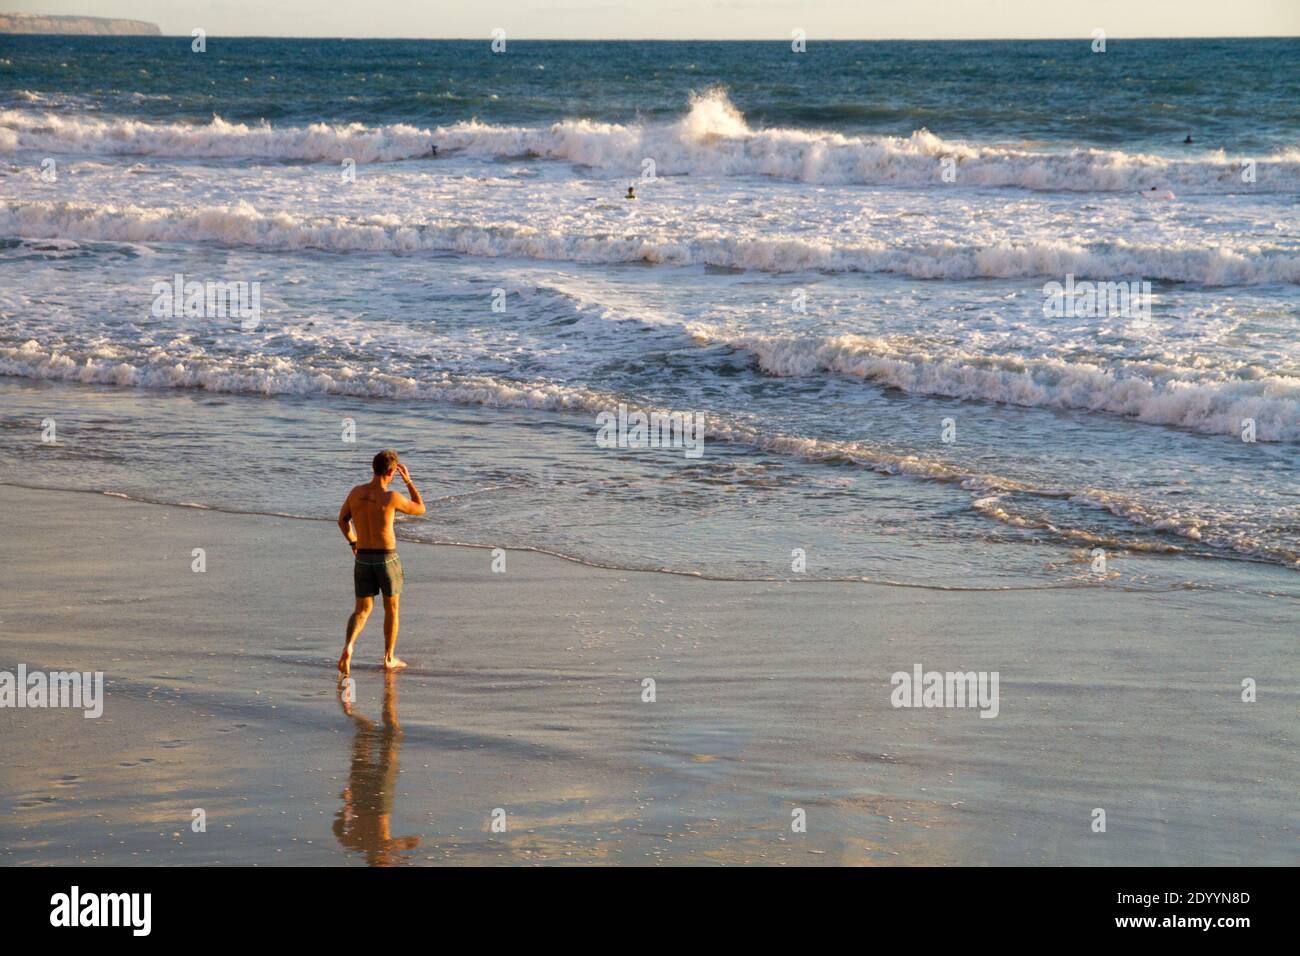 Post Covid lockdown, man wets his feet in sea water, Mallorca Spain Stock Photo